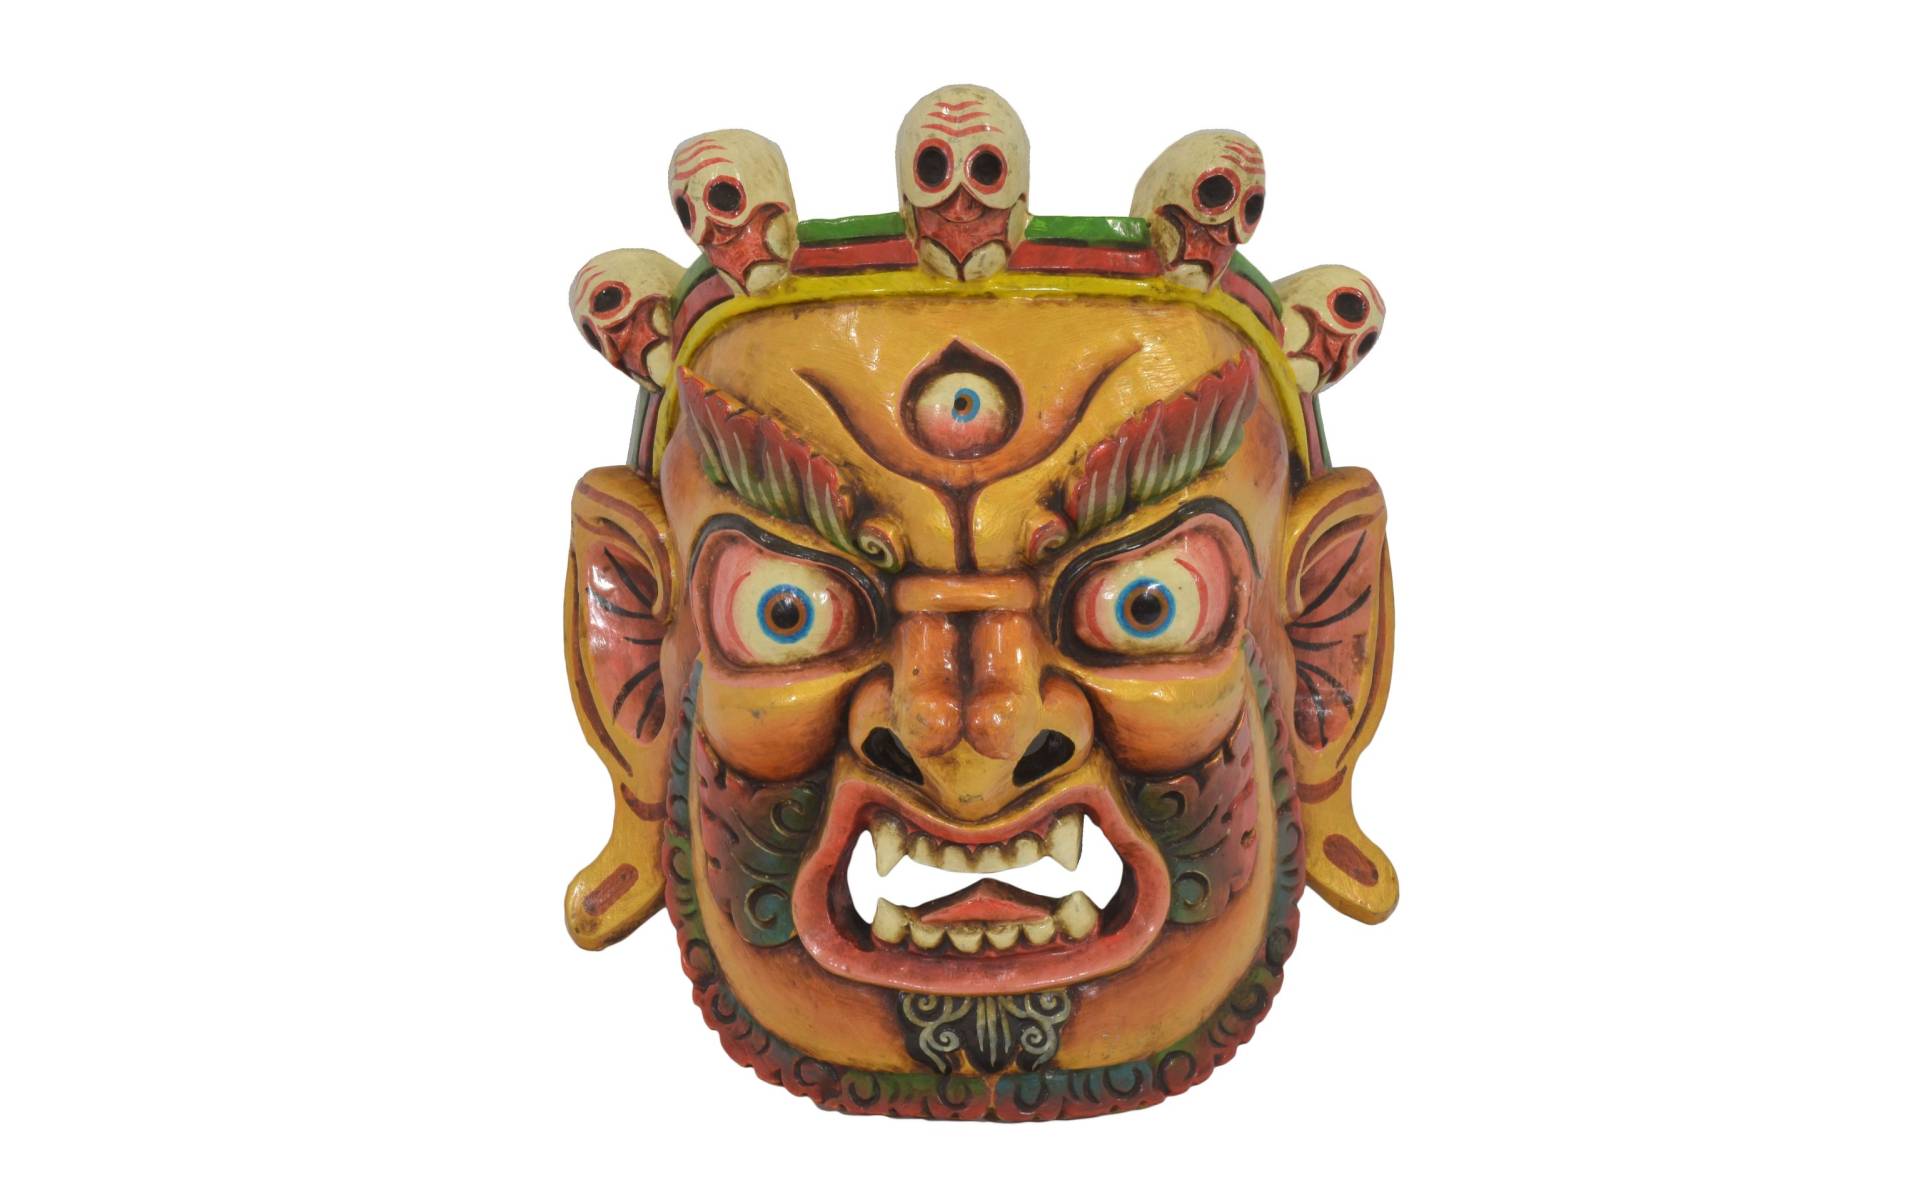 Drevená maska, "Bhairab", ručne vyrezávaná, 29x13x31cm